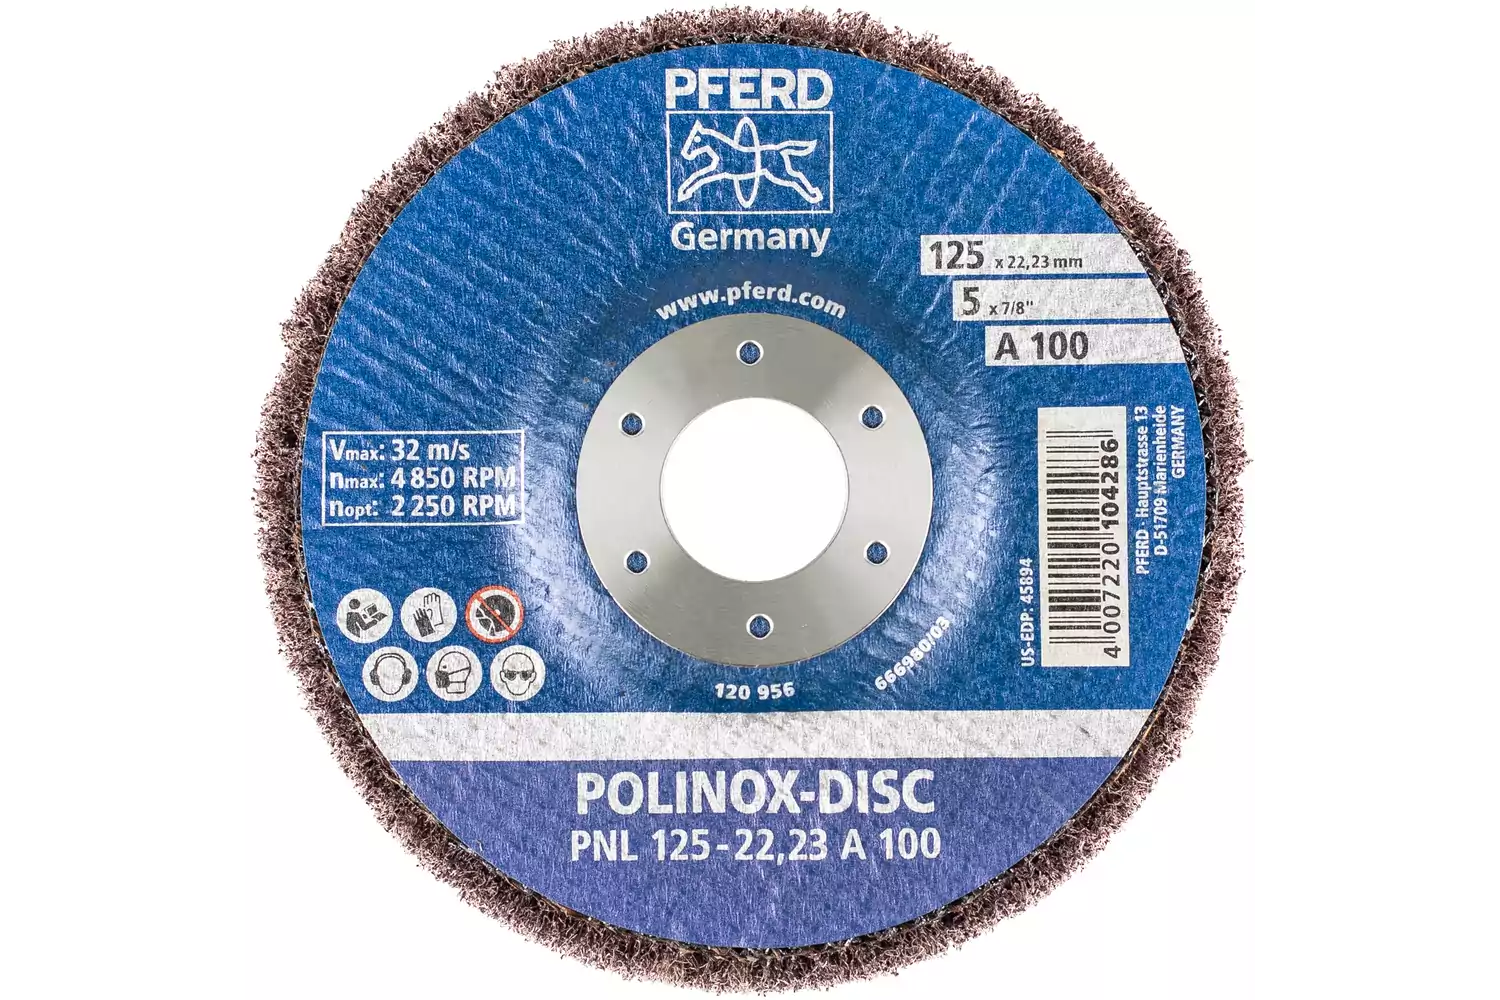 POLINOX vliesslijpschijf PNL Ø 125 mm asgat-Ø 22,23 mm A100 voor fijnslijpen & finish 3